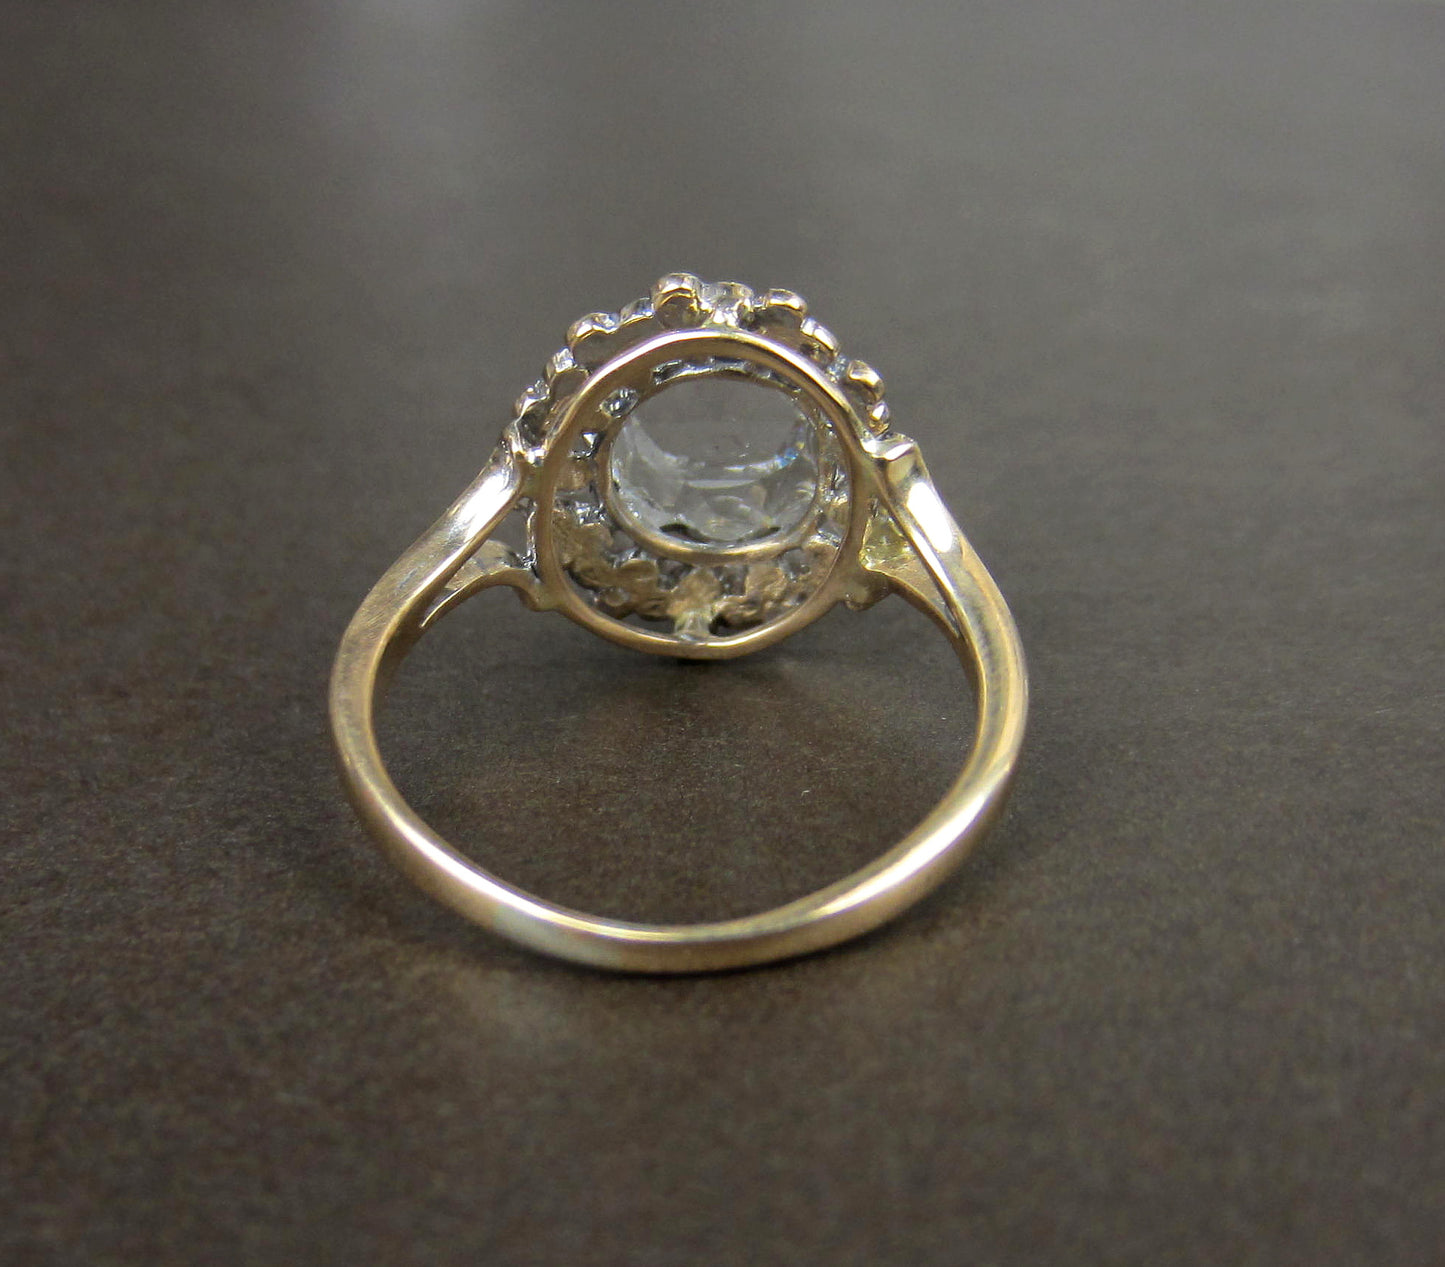 SOLD--Antique Giant Rose Cut Diamond Ring 18k